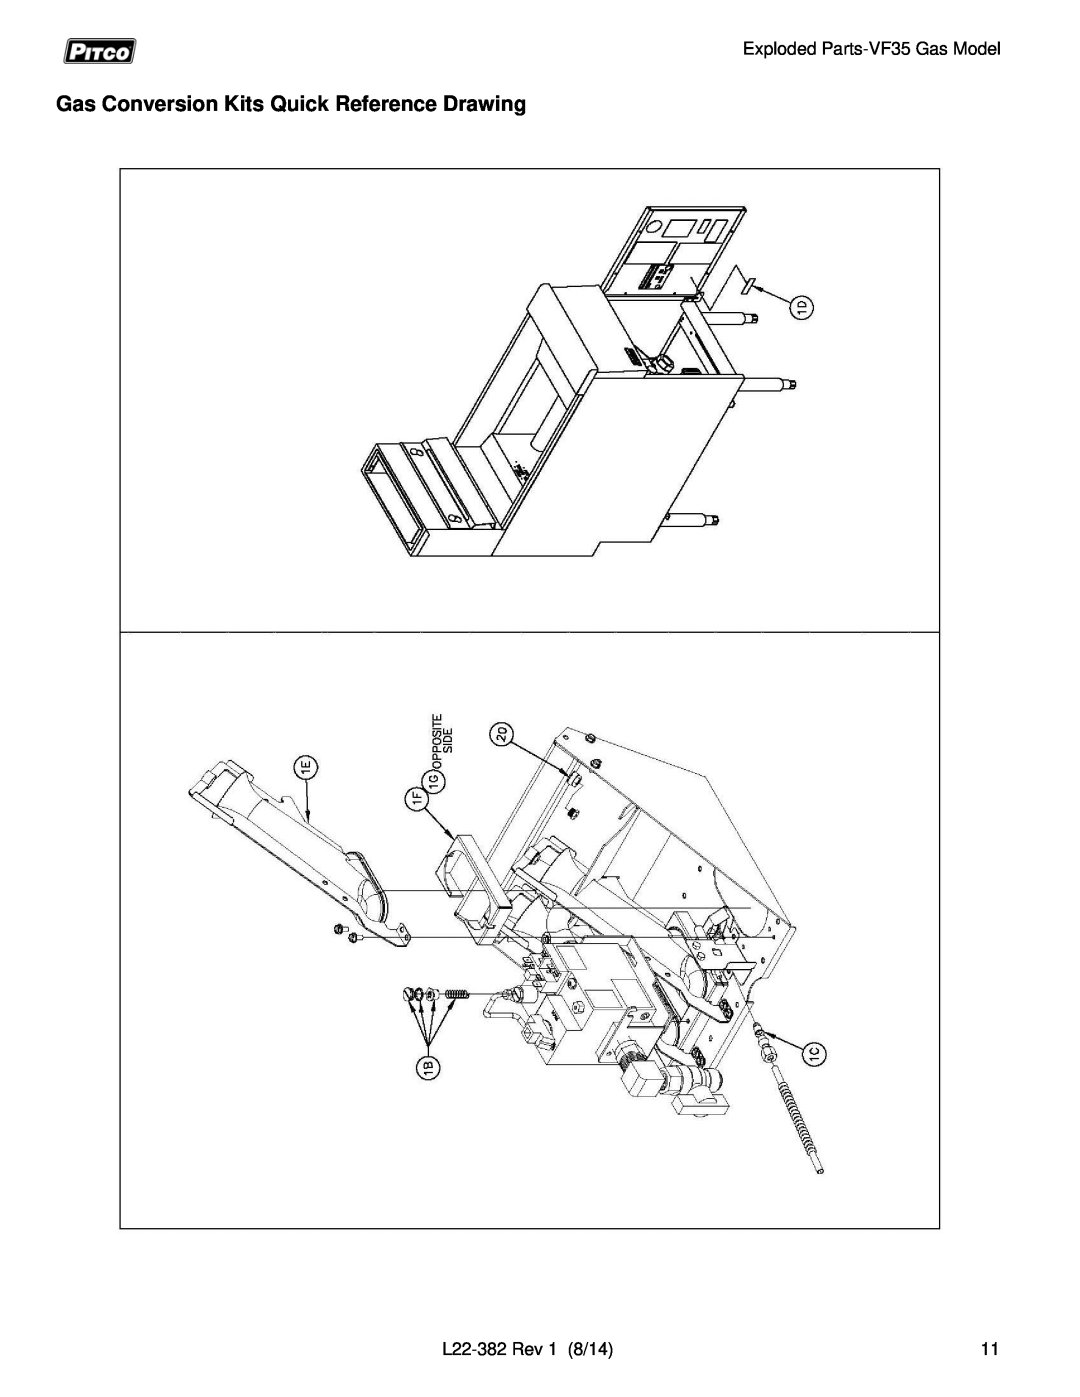 Pitco Frialator manual Gas Conversion Kits Quick Reference Drawing, Exploded Parts-VF35Gas Model, L22-382Rev 1 8/14 